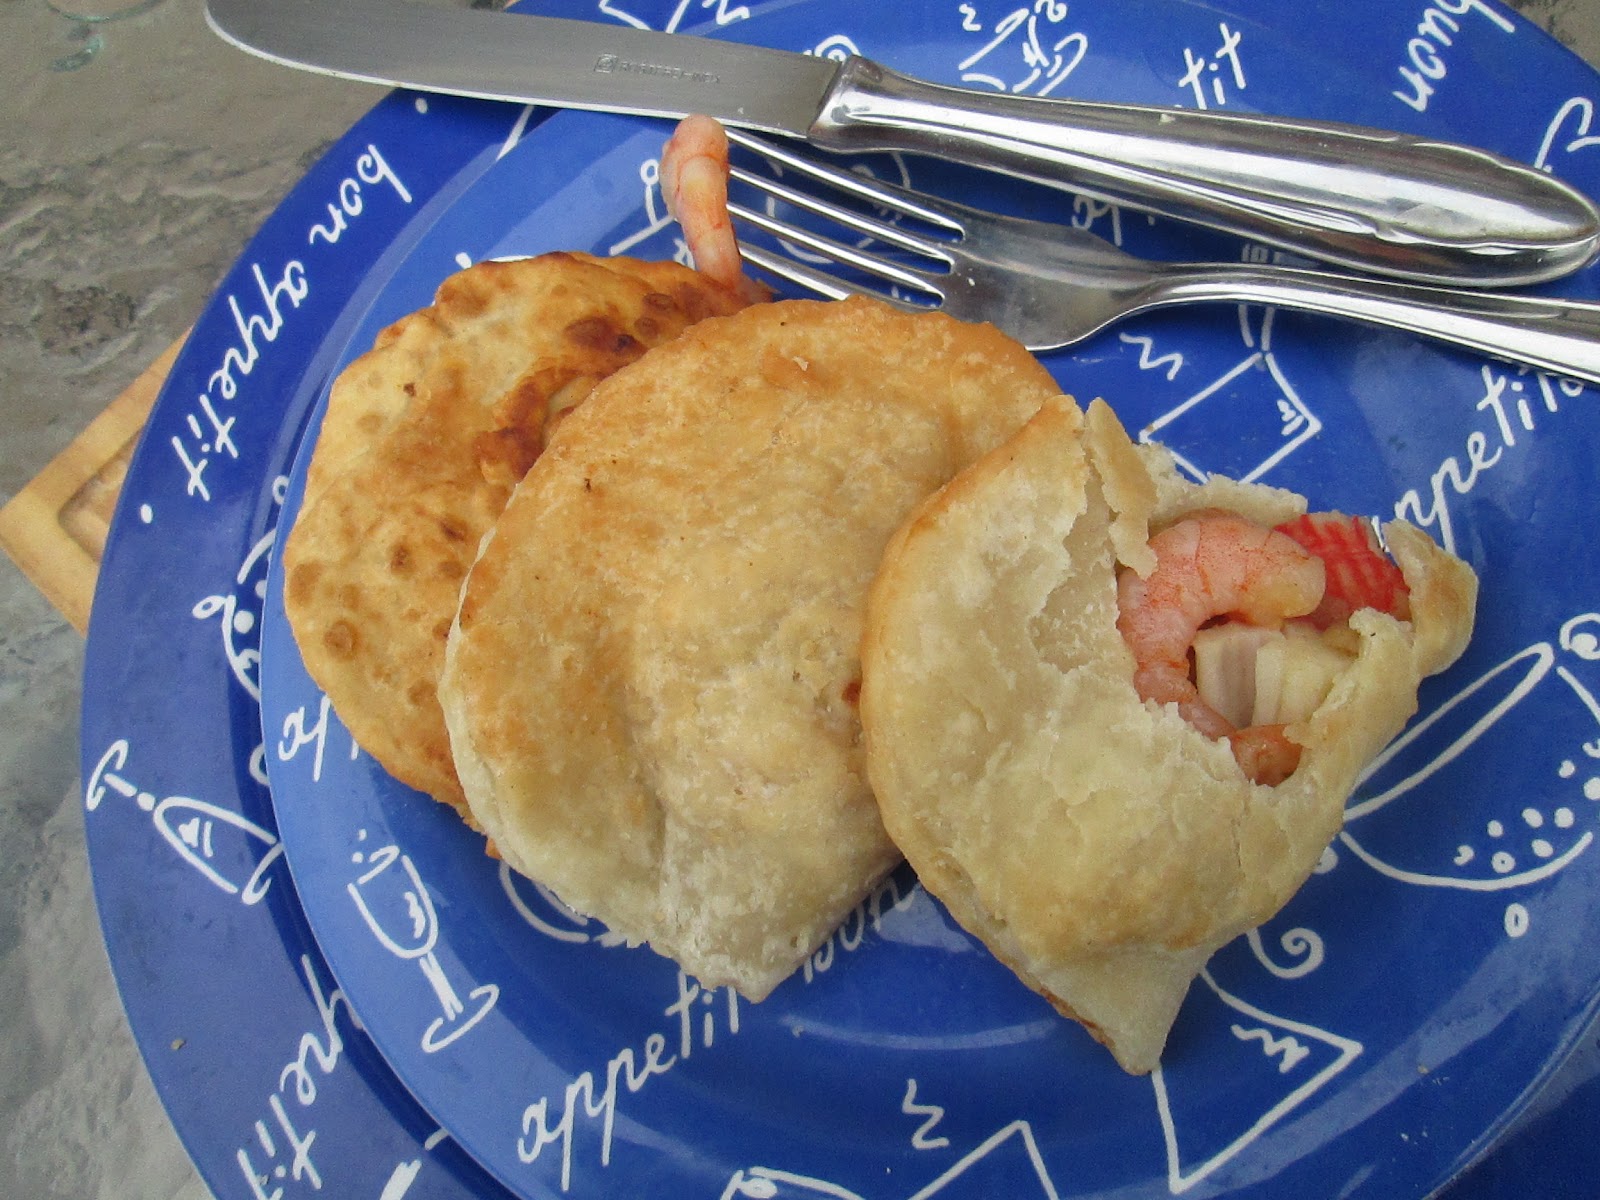 Canela kitchen (gloria): Seafood empanadas (from Chile)